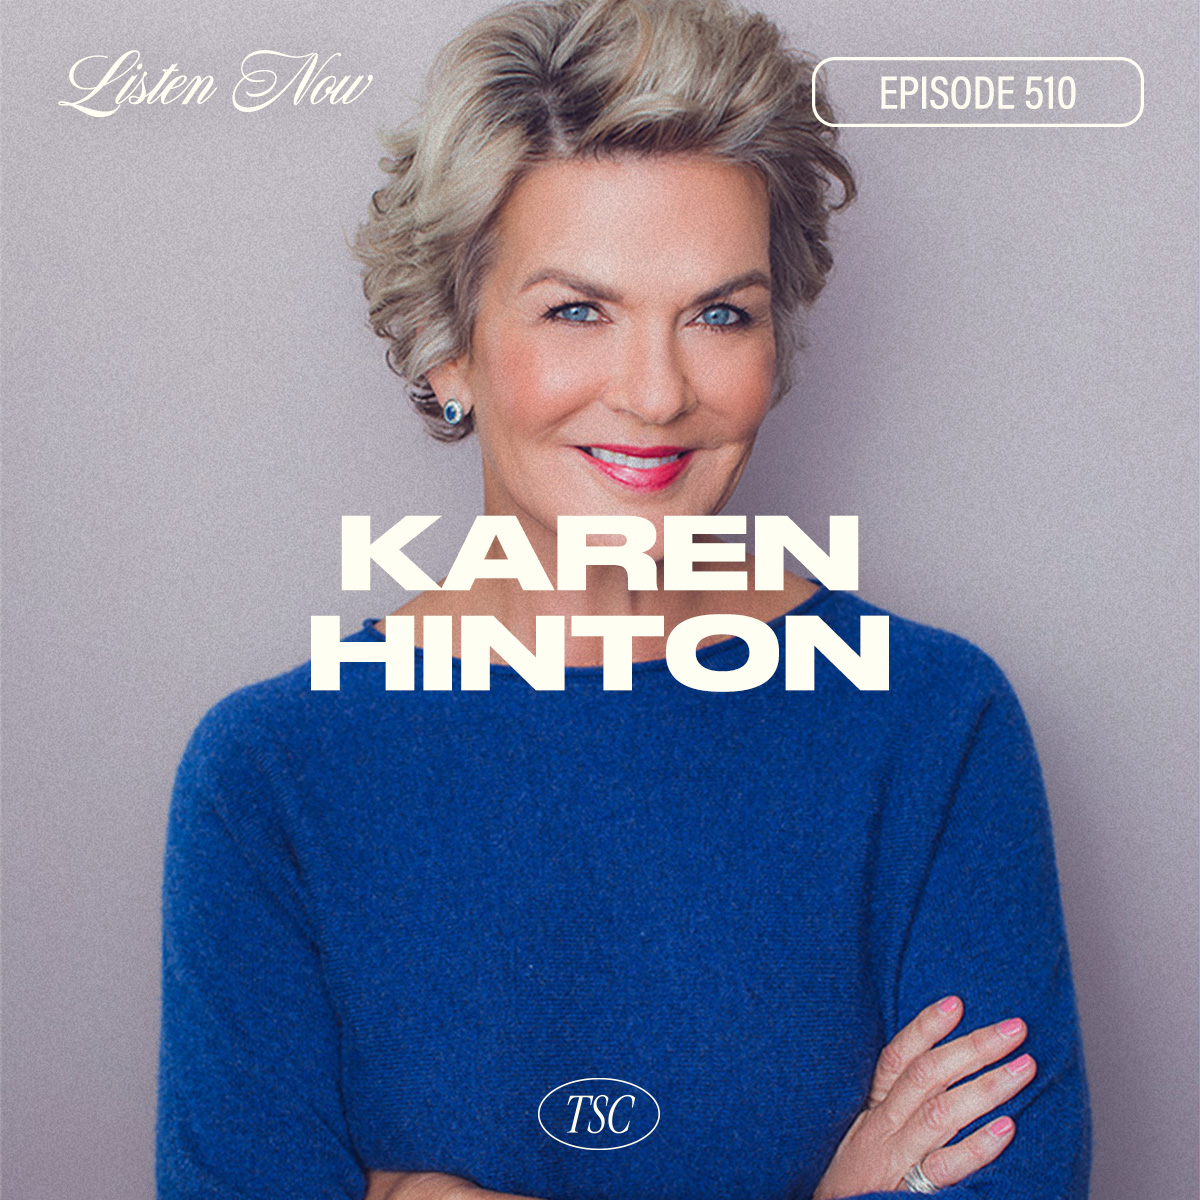 Karen Hinton